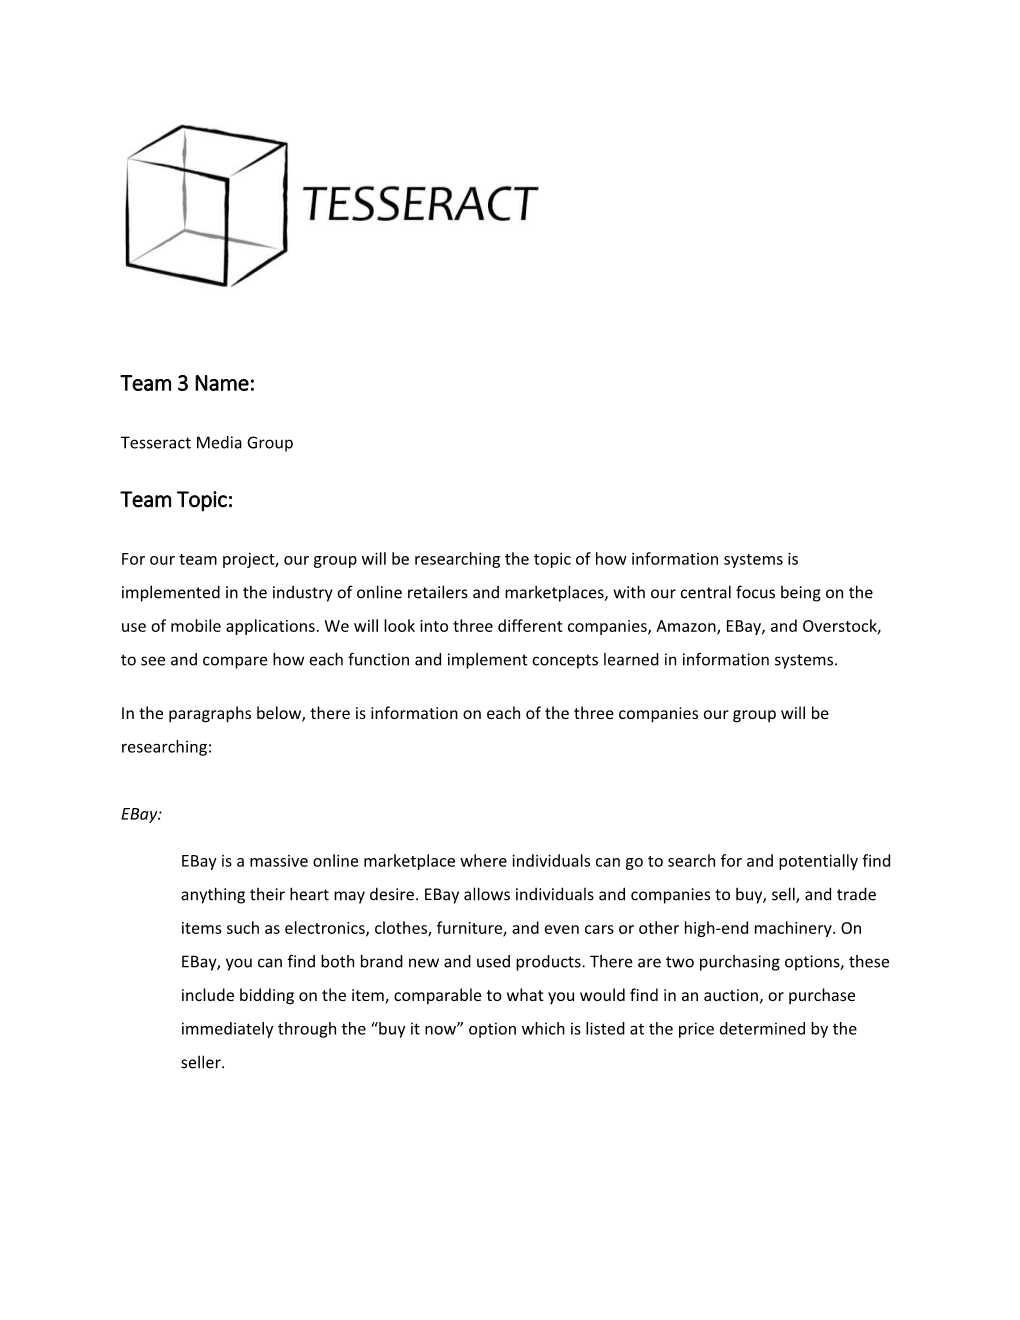 Tesseract Media Group